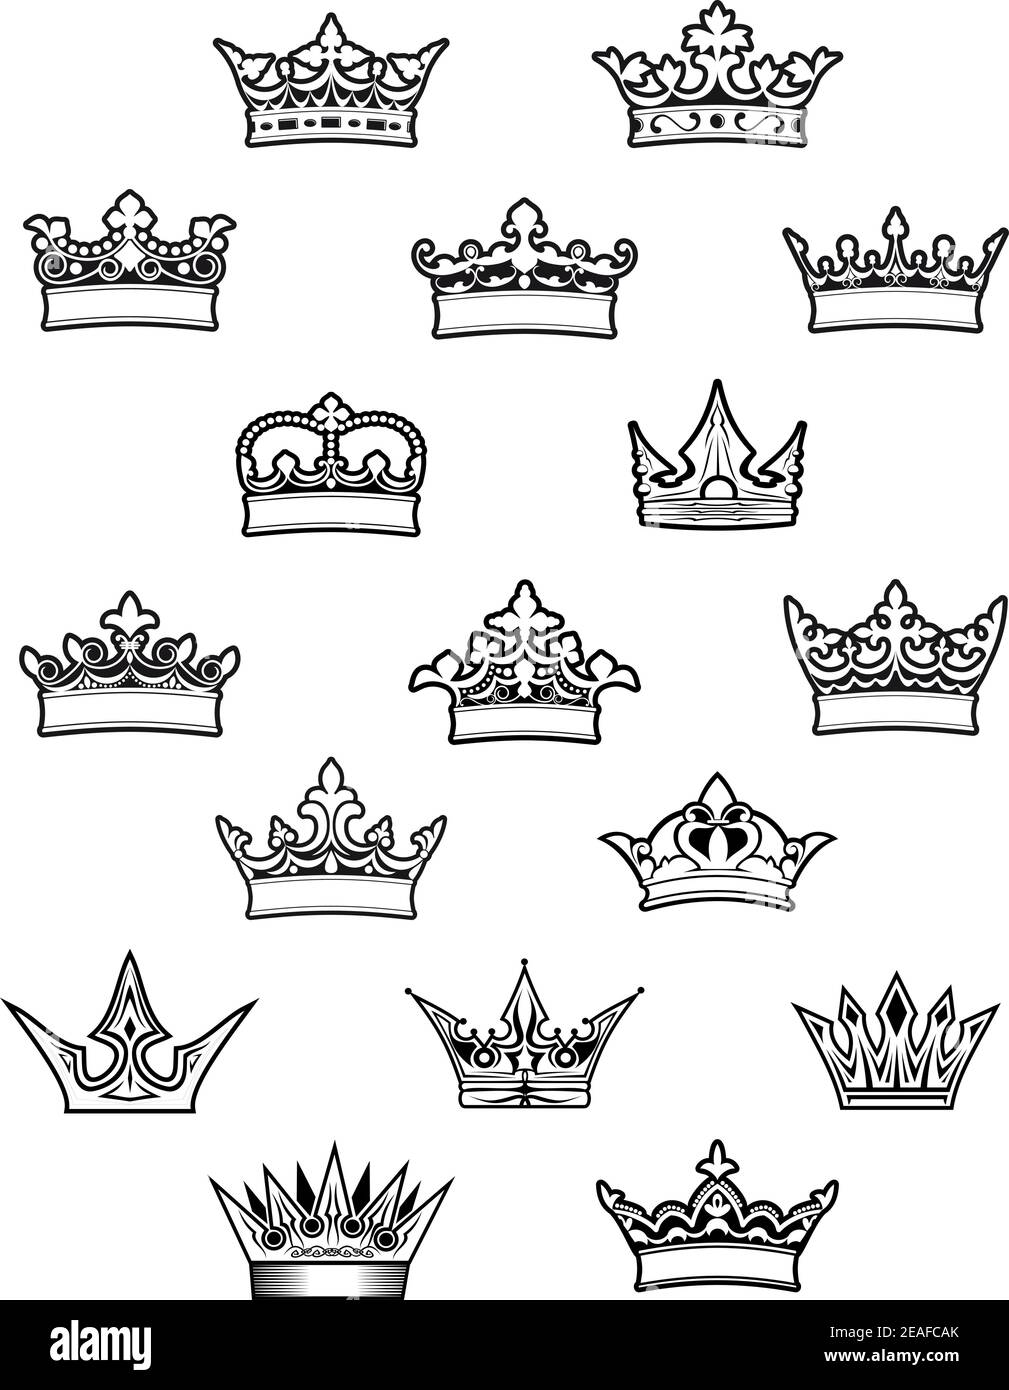 Free Queen Crown Drawing, Download Free Queen Crown Drawing png images,  Free ClipArts on Clipart Library